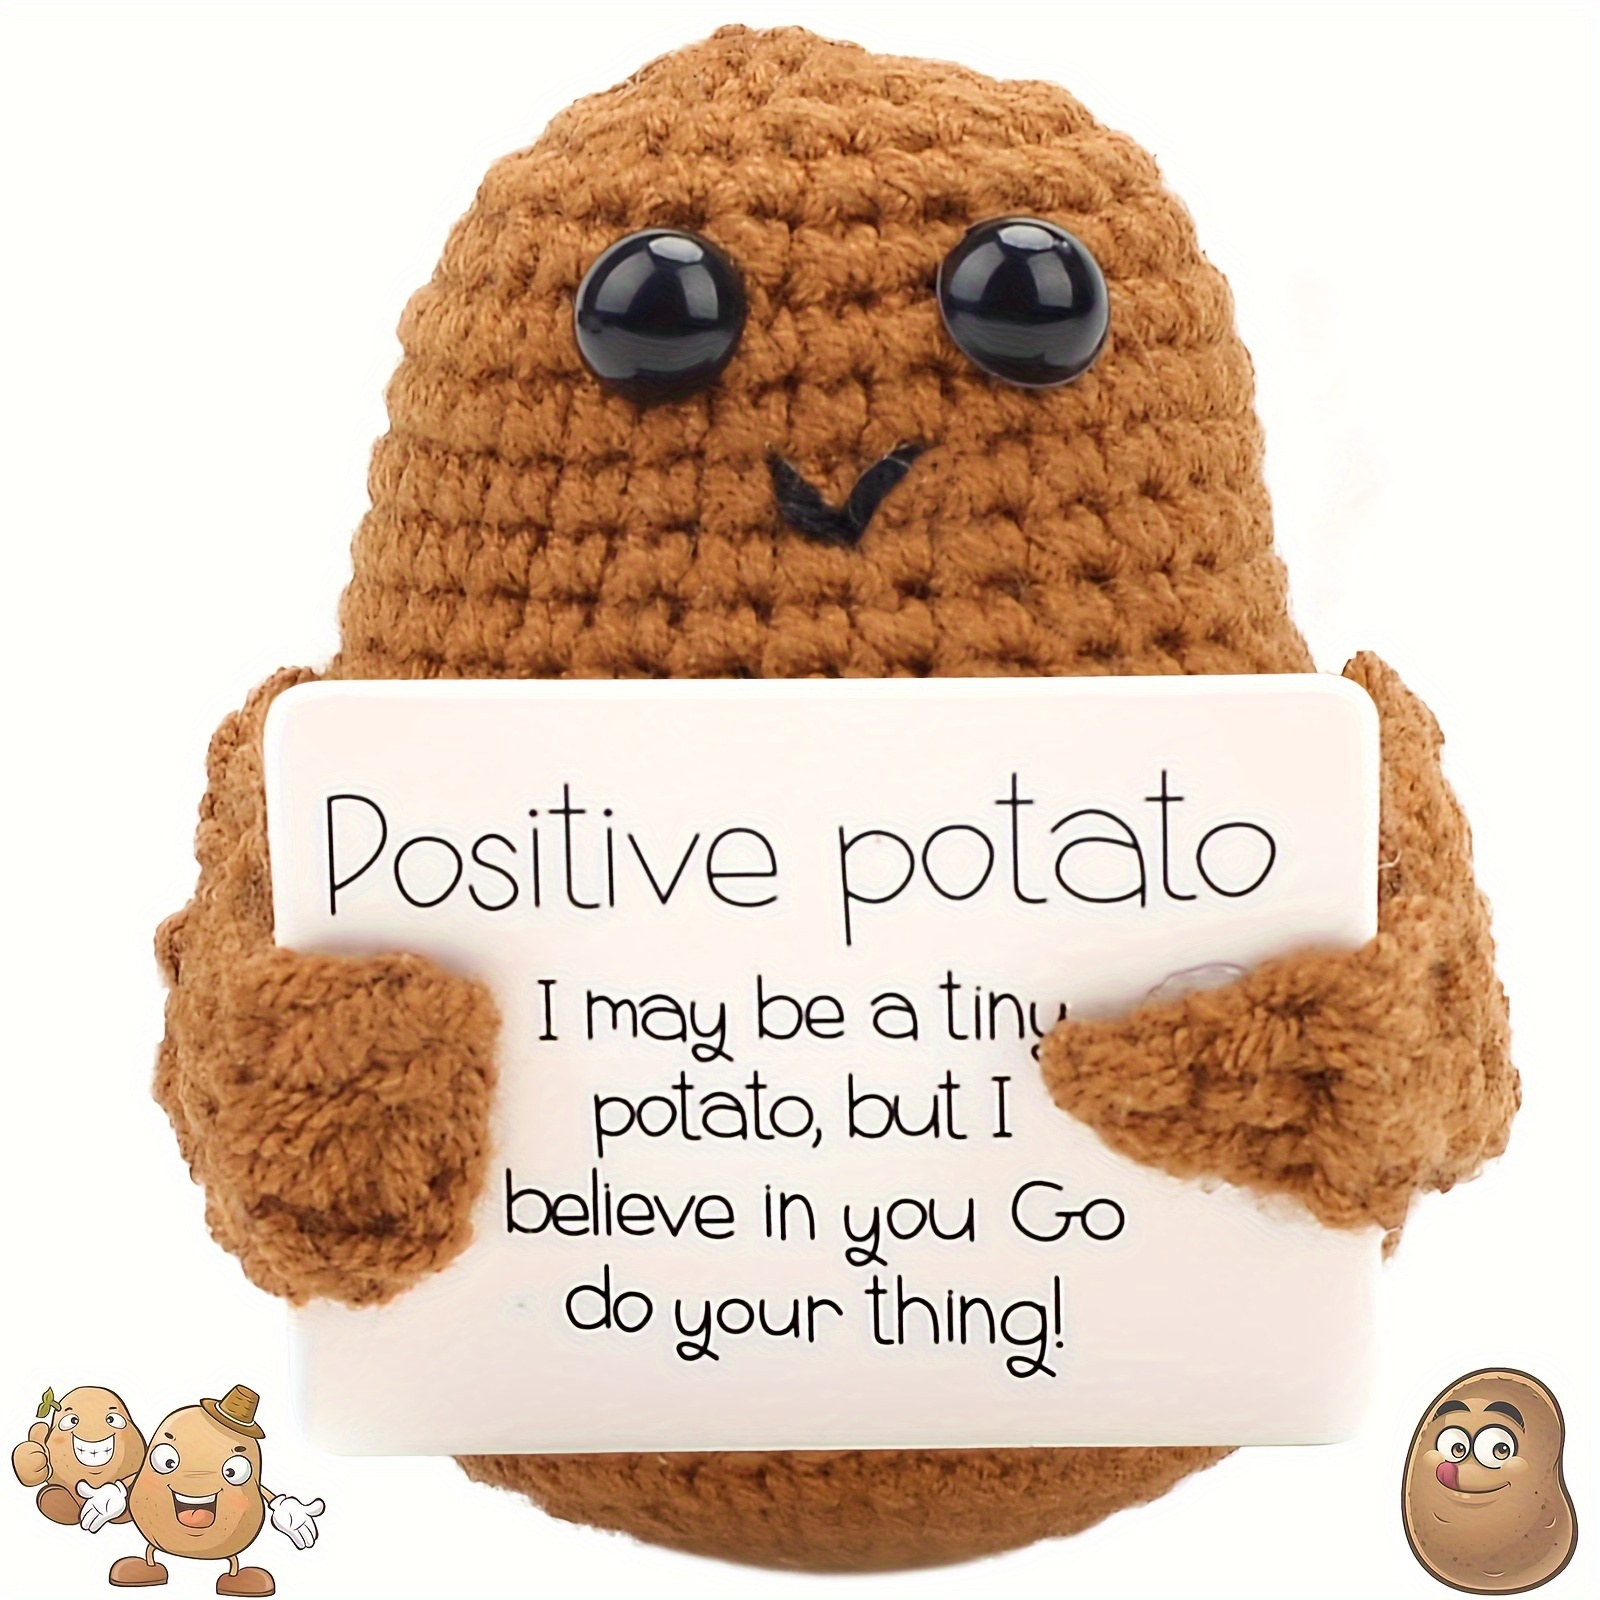 Emotional Support Potato Inspiring Potato Handmade Potato Plush